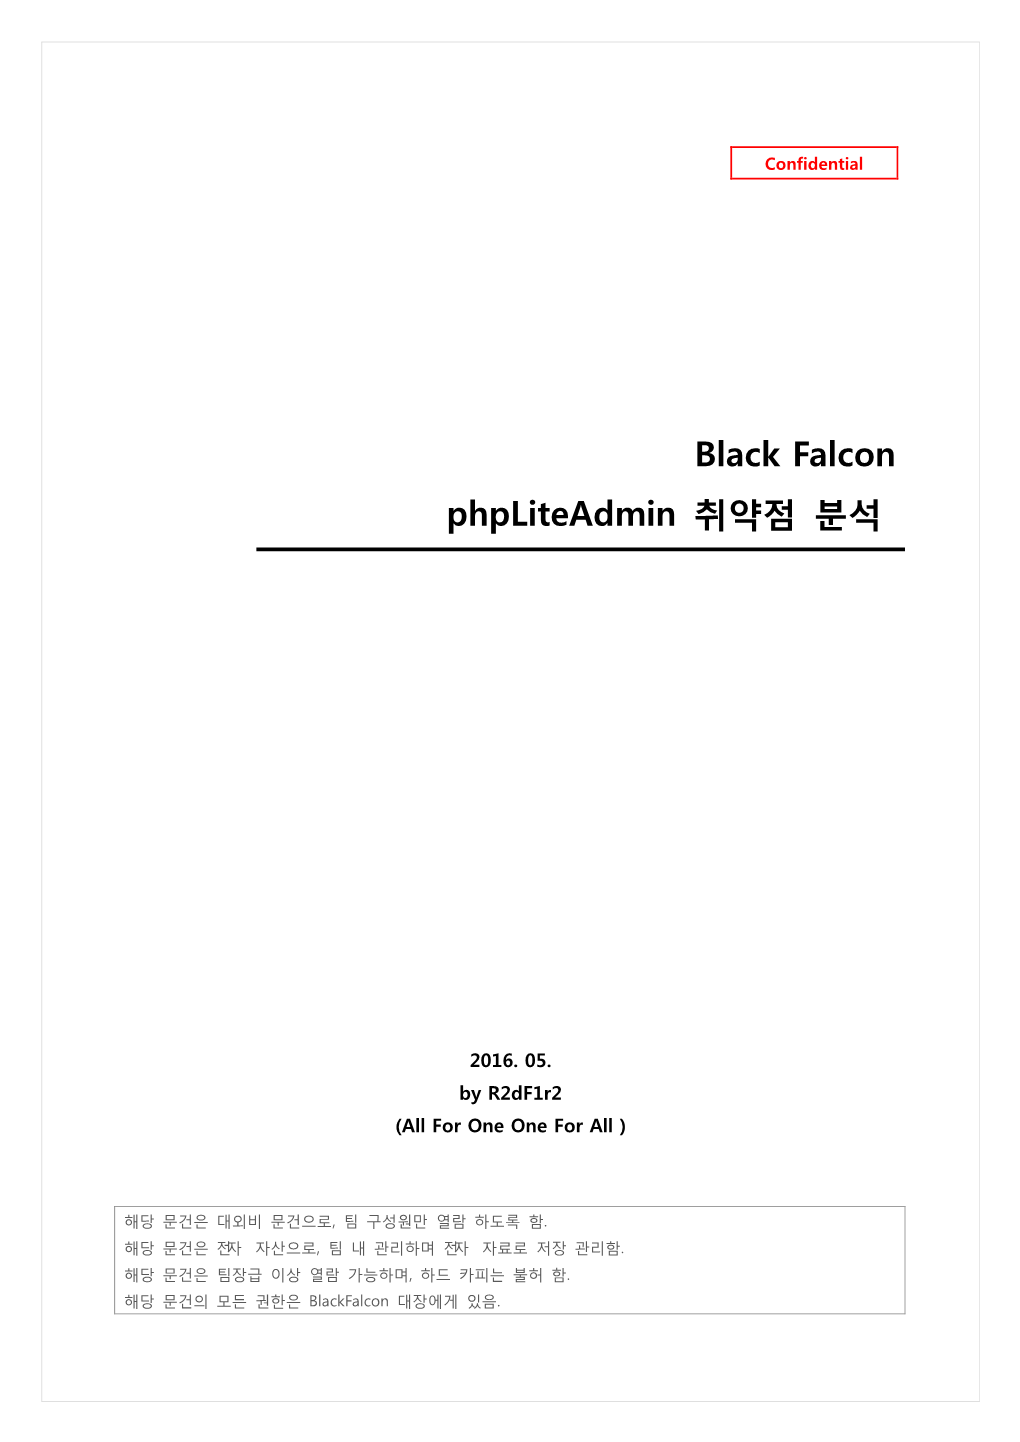 Black Falcon Phpliteadmin 취약점 분석